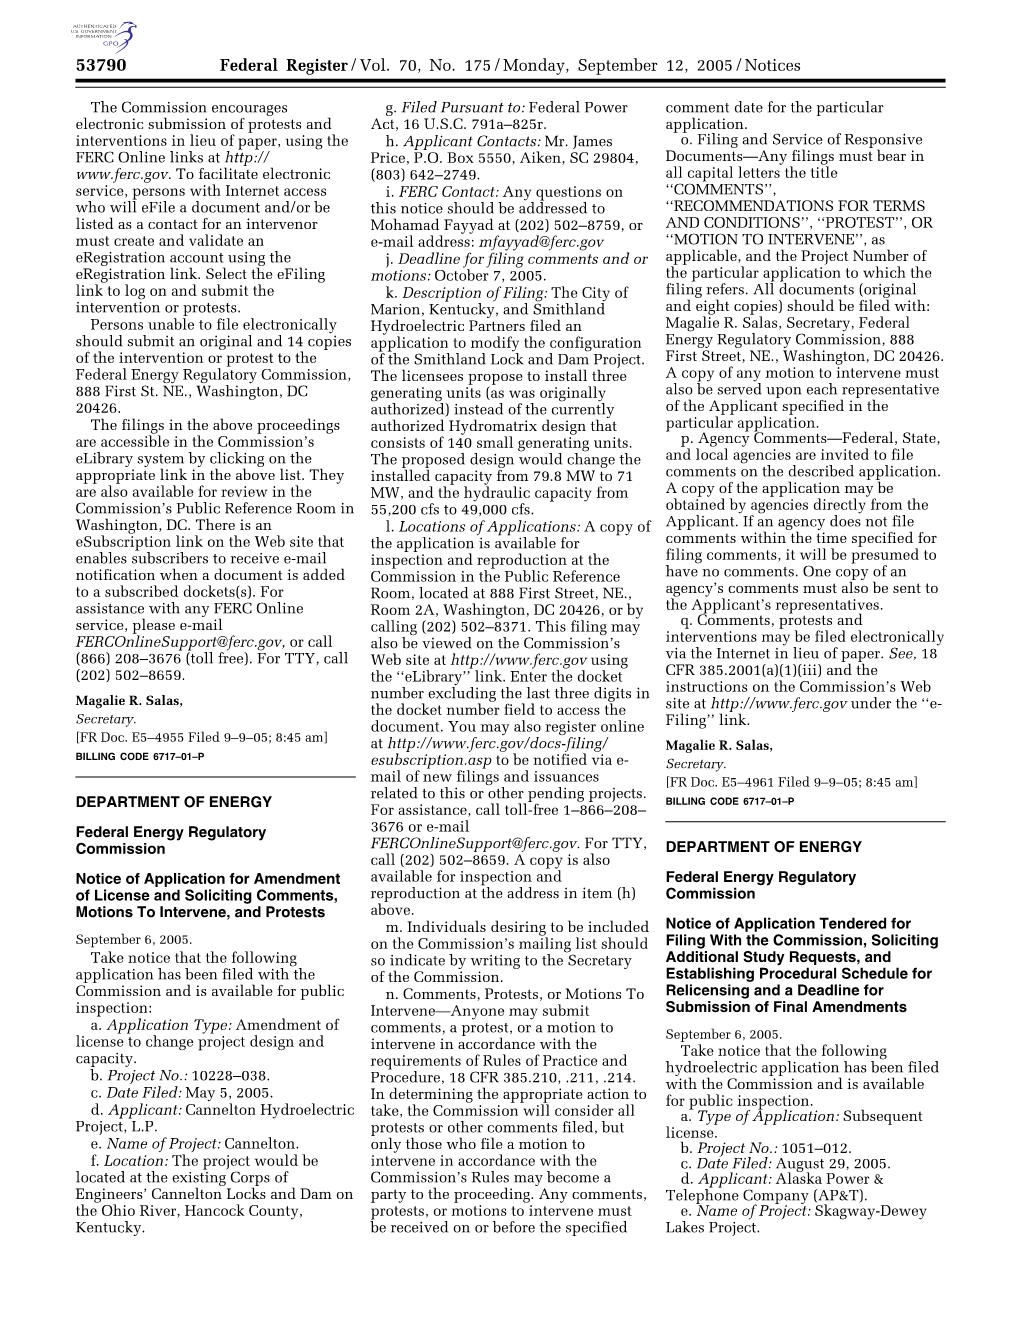 Federal Register/Vol. 70, No. 175/Monday, September 12, 2005